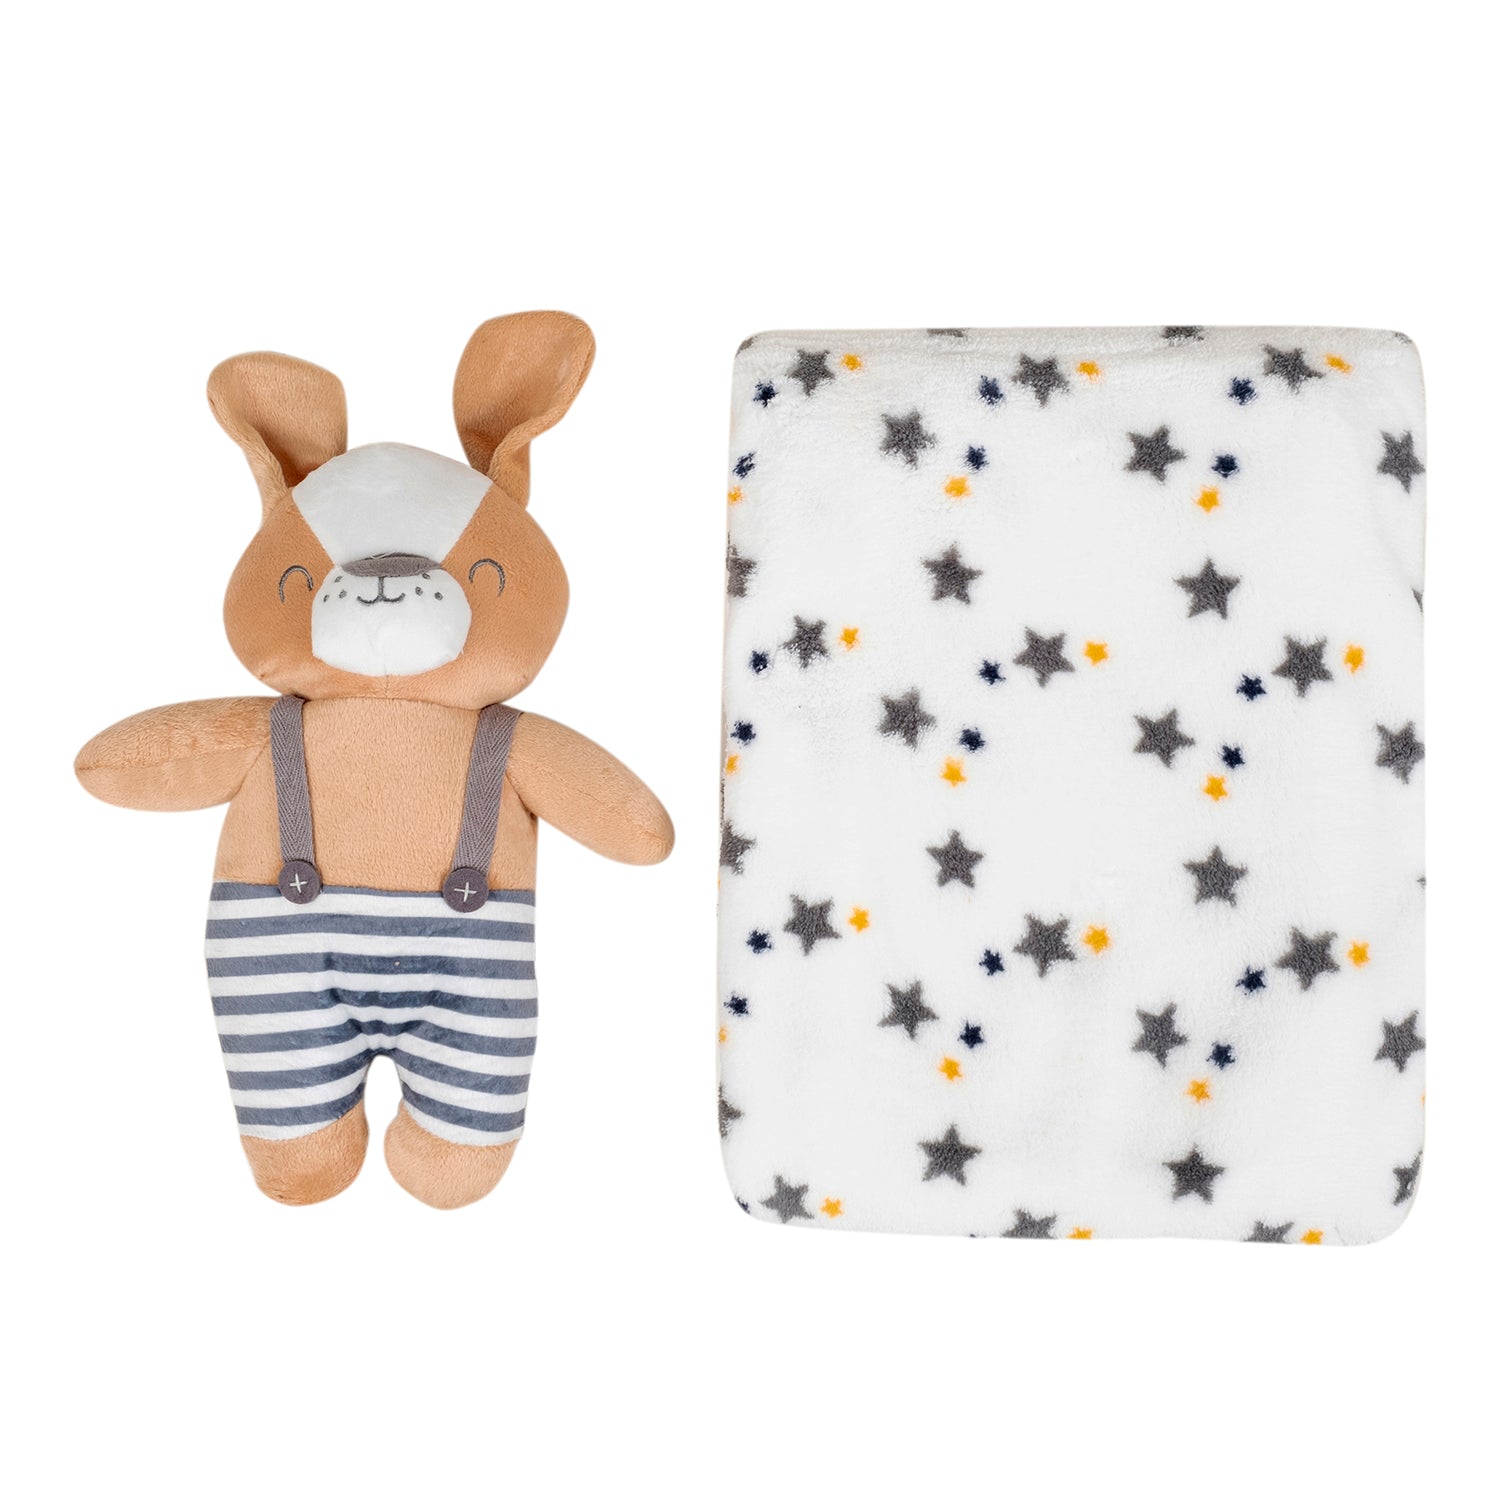 Baby Moo Dog Snuggle Buddy Soft Rattle and Plush Blanket Gift Toy Blanket - White